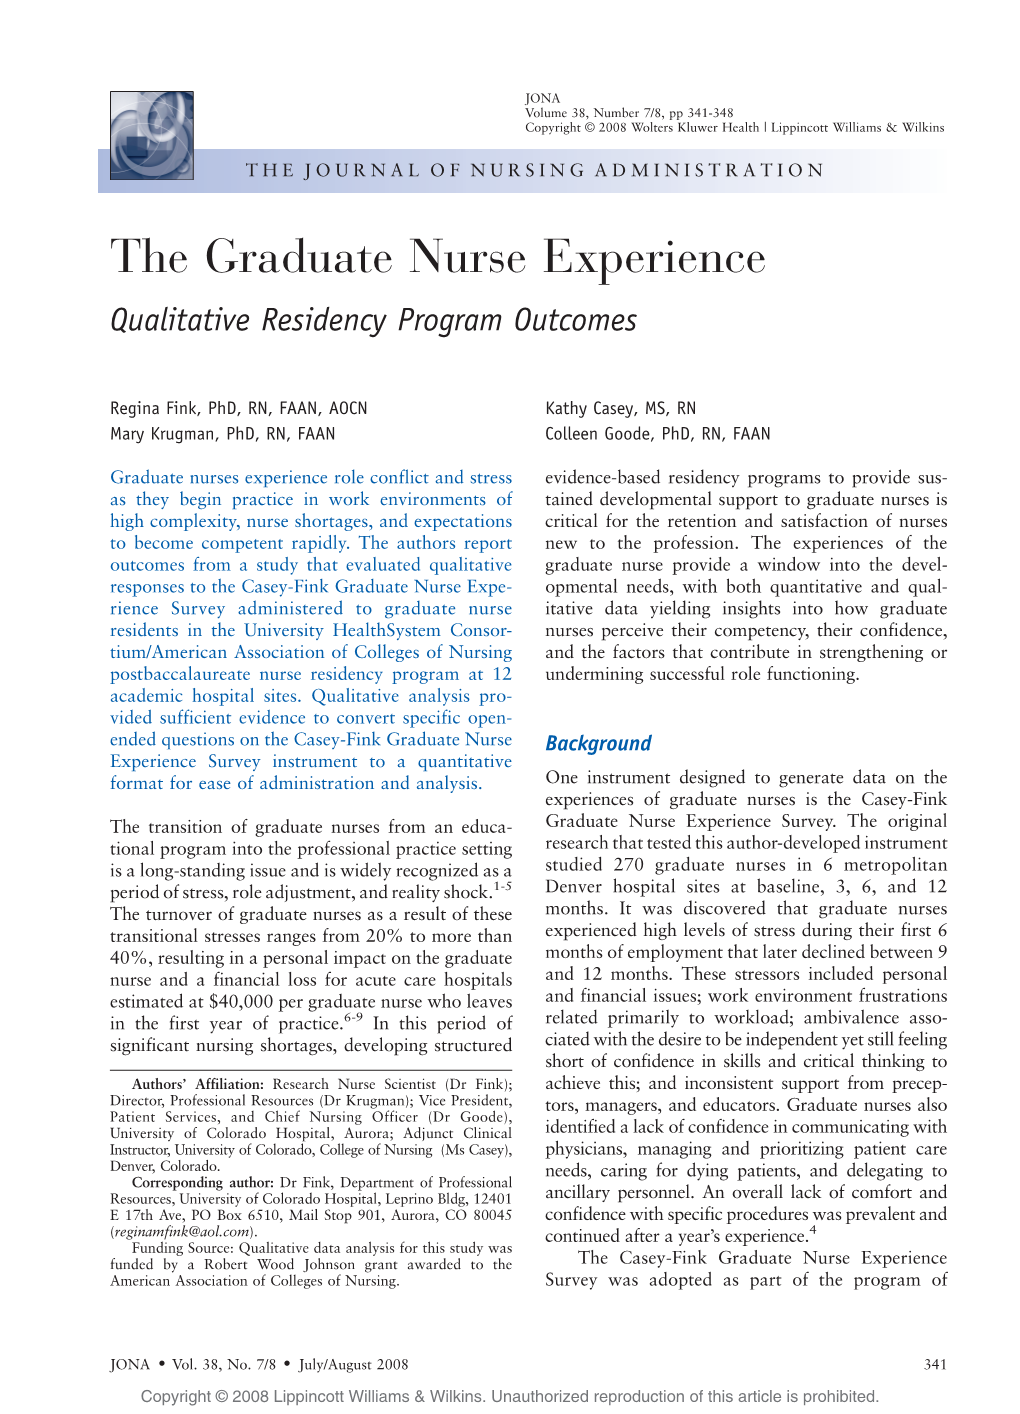 The Graduate Nurse Experience Qualitative Study